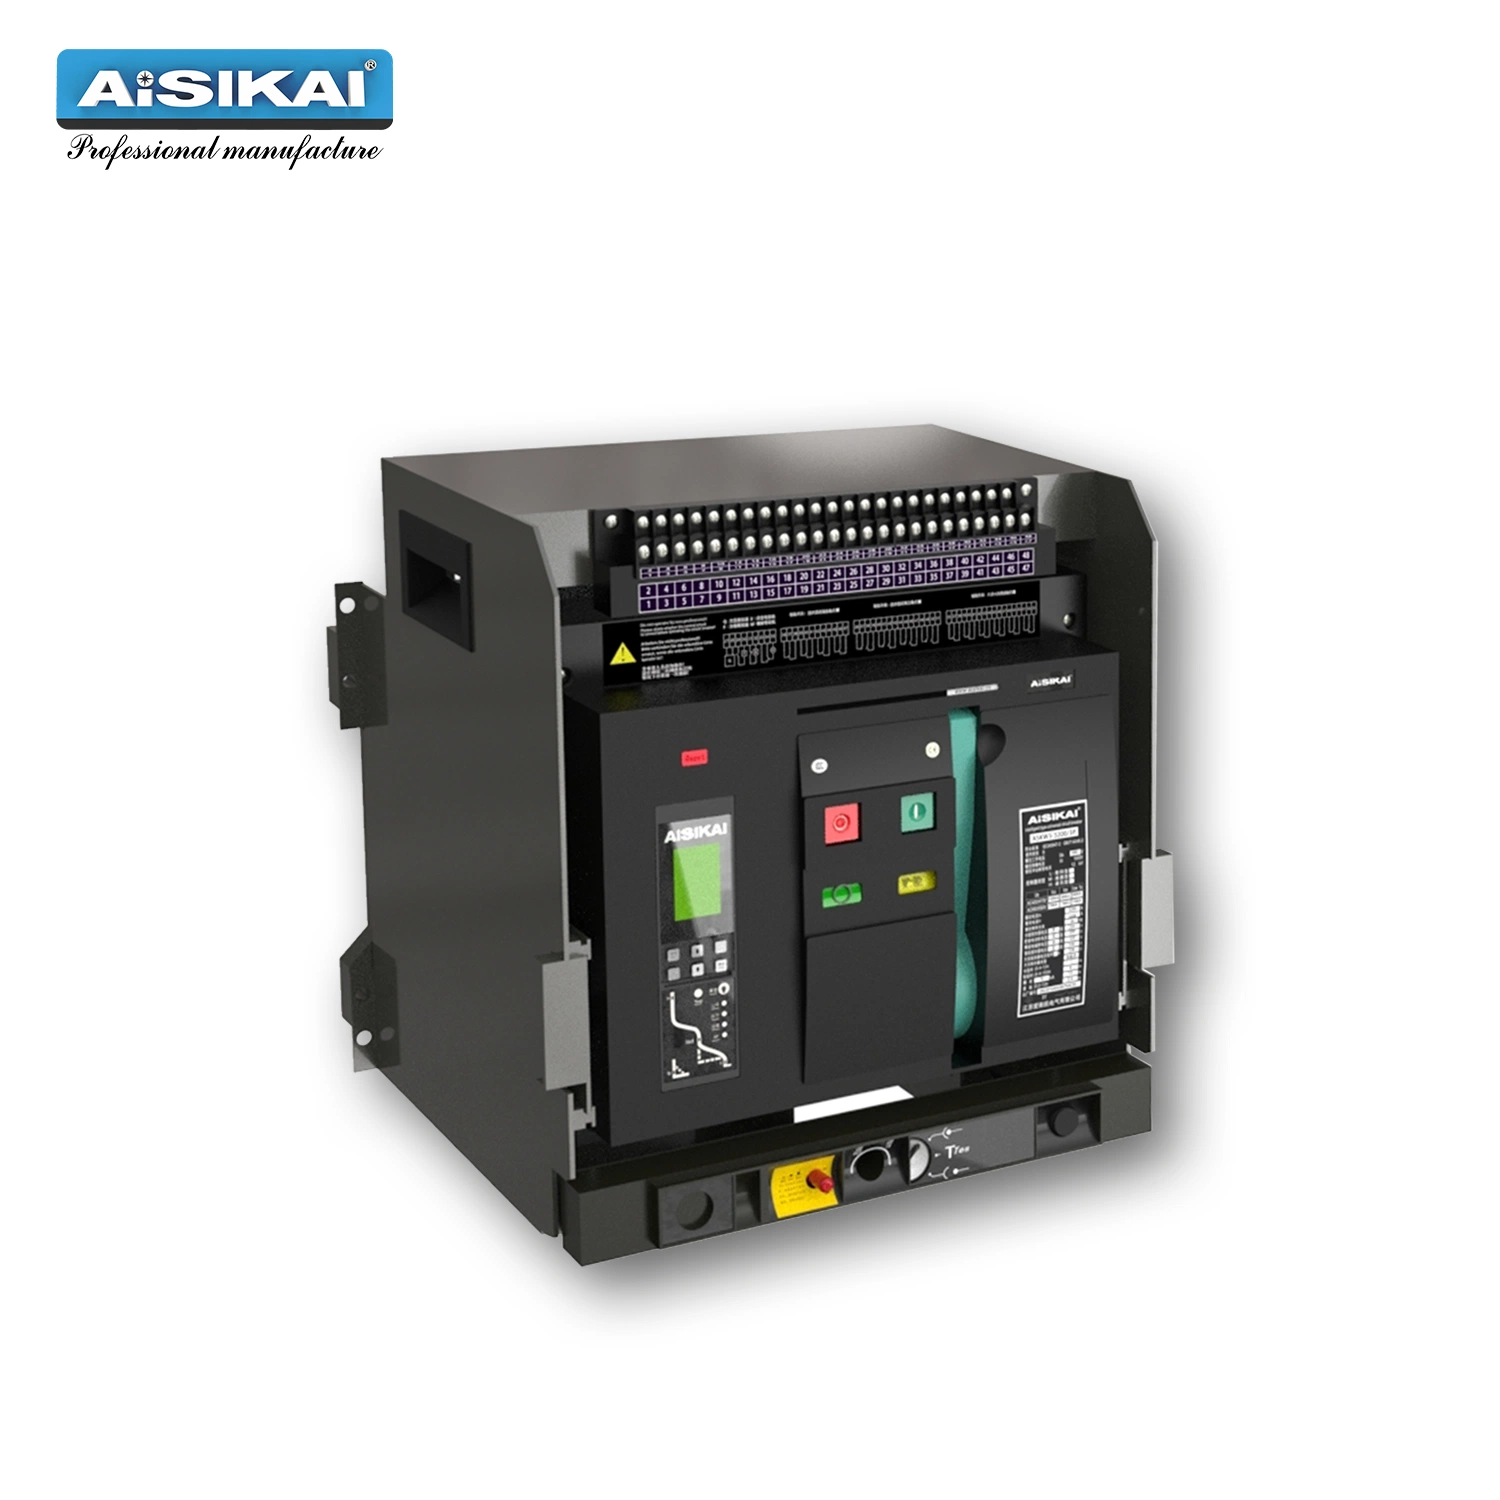 Aisikai 1600A Acb eléctricas de baja tensión Universal inteligente disyuntor de circuito de aire